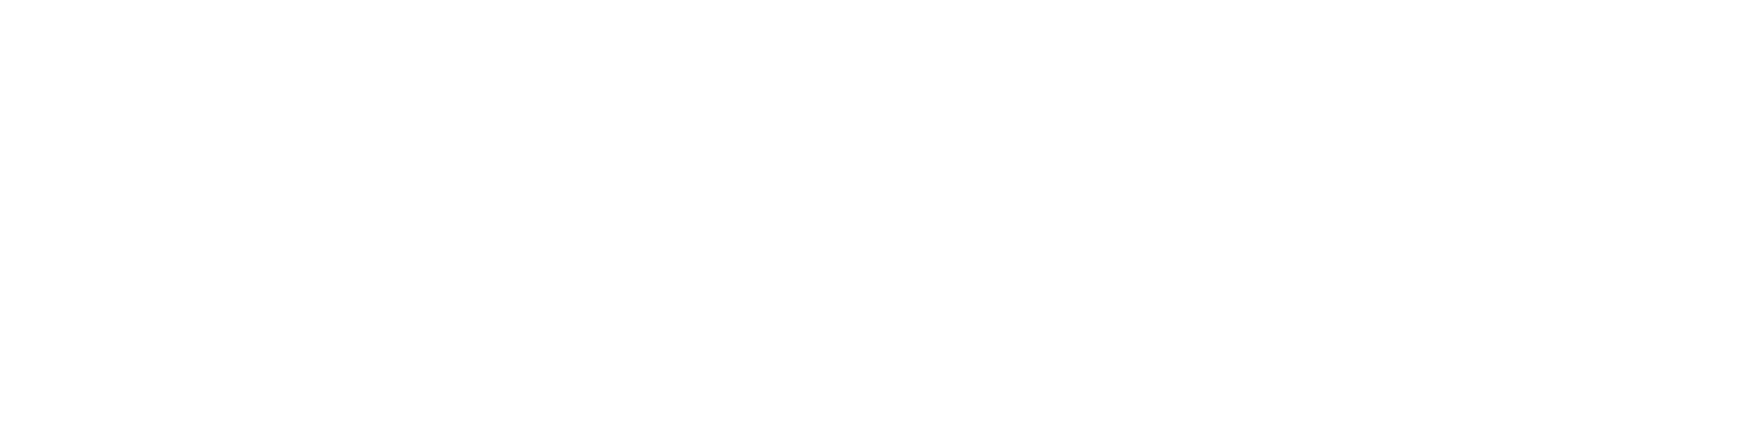 XPEL logo grand pour les fonds sombres (PNG transparent)